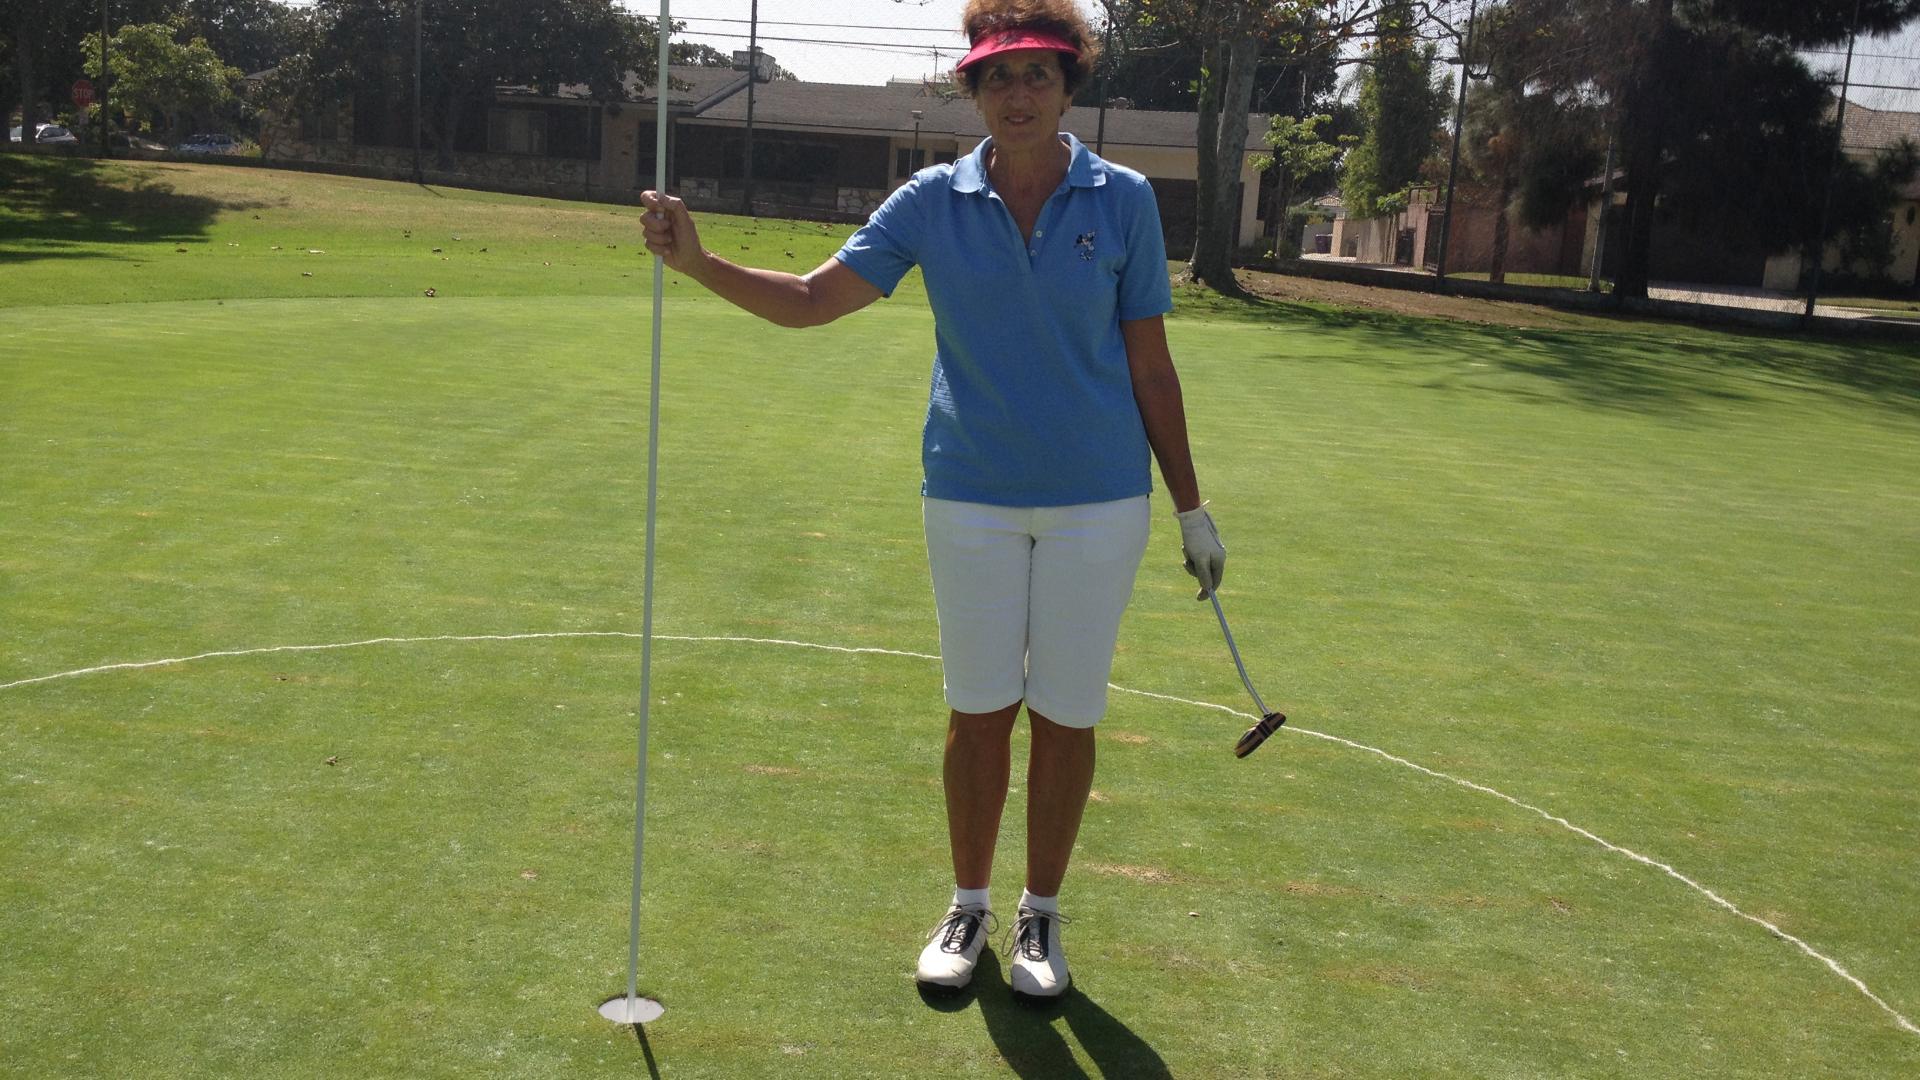 Joyce playing golf